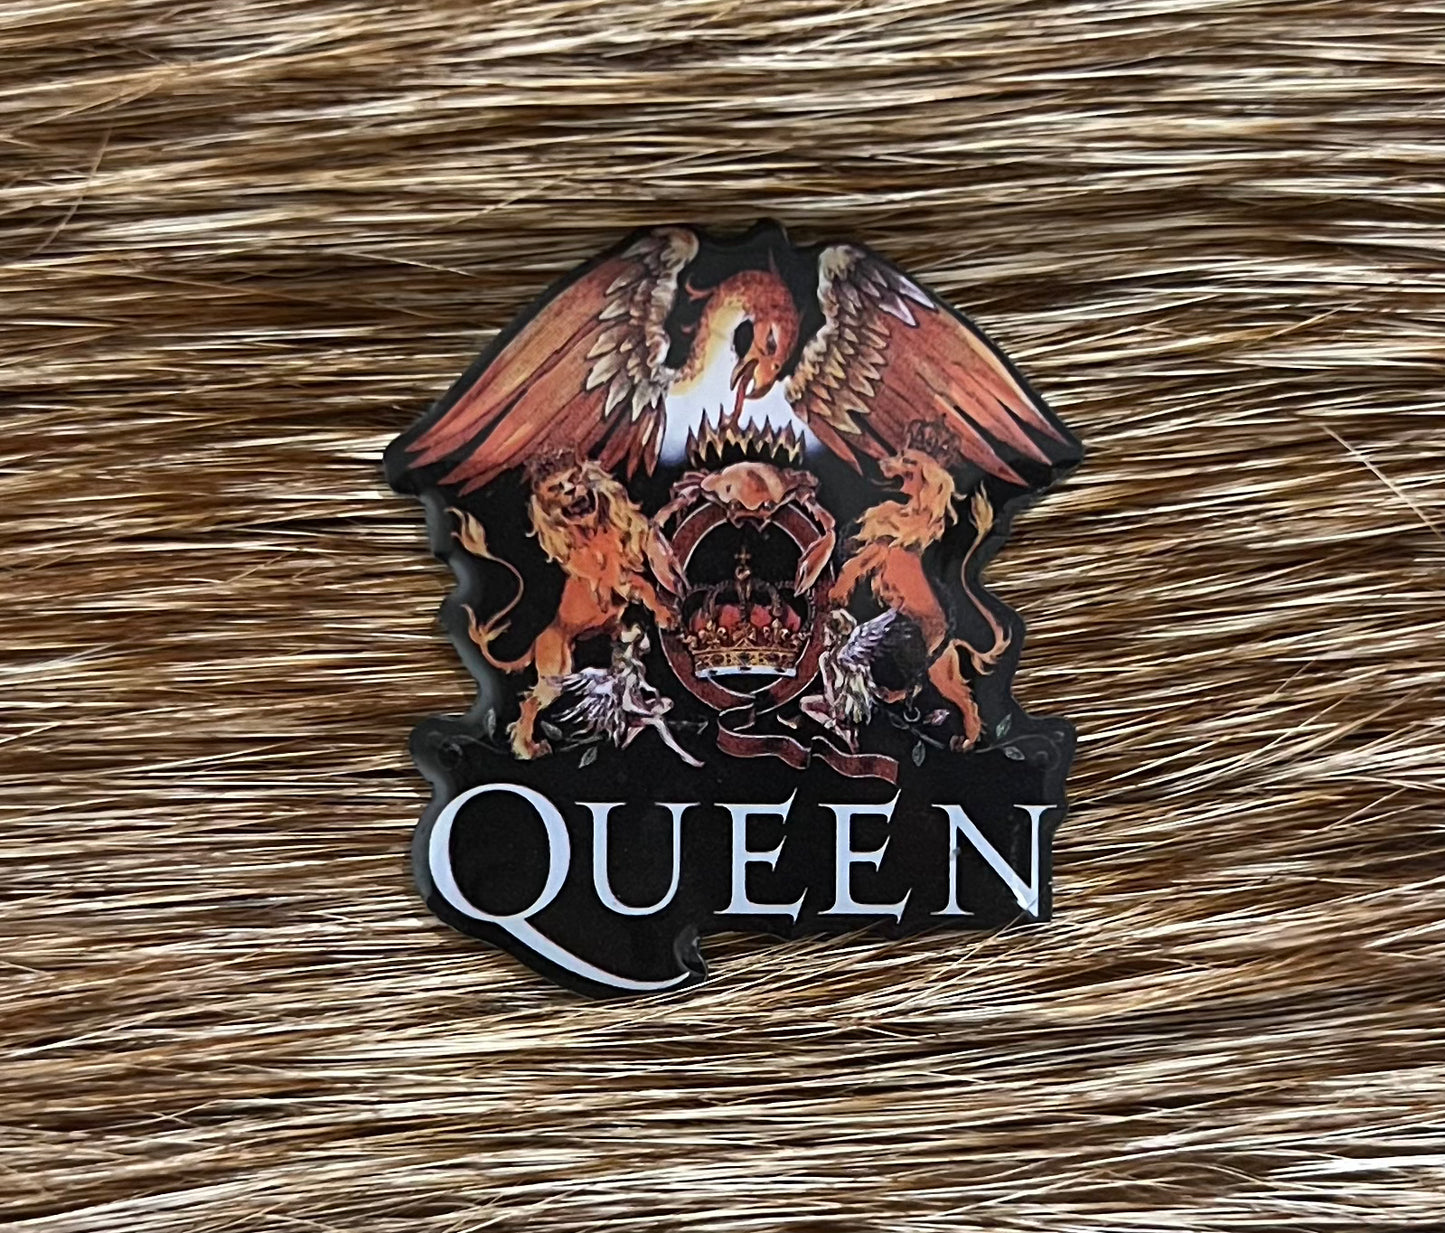 Queen - Crest Full Colour Pin